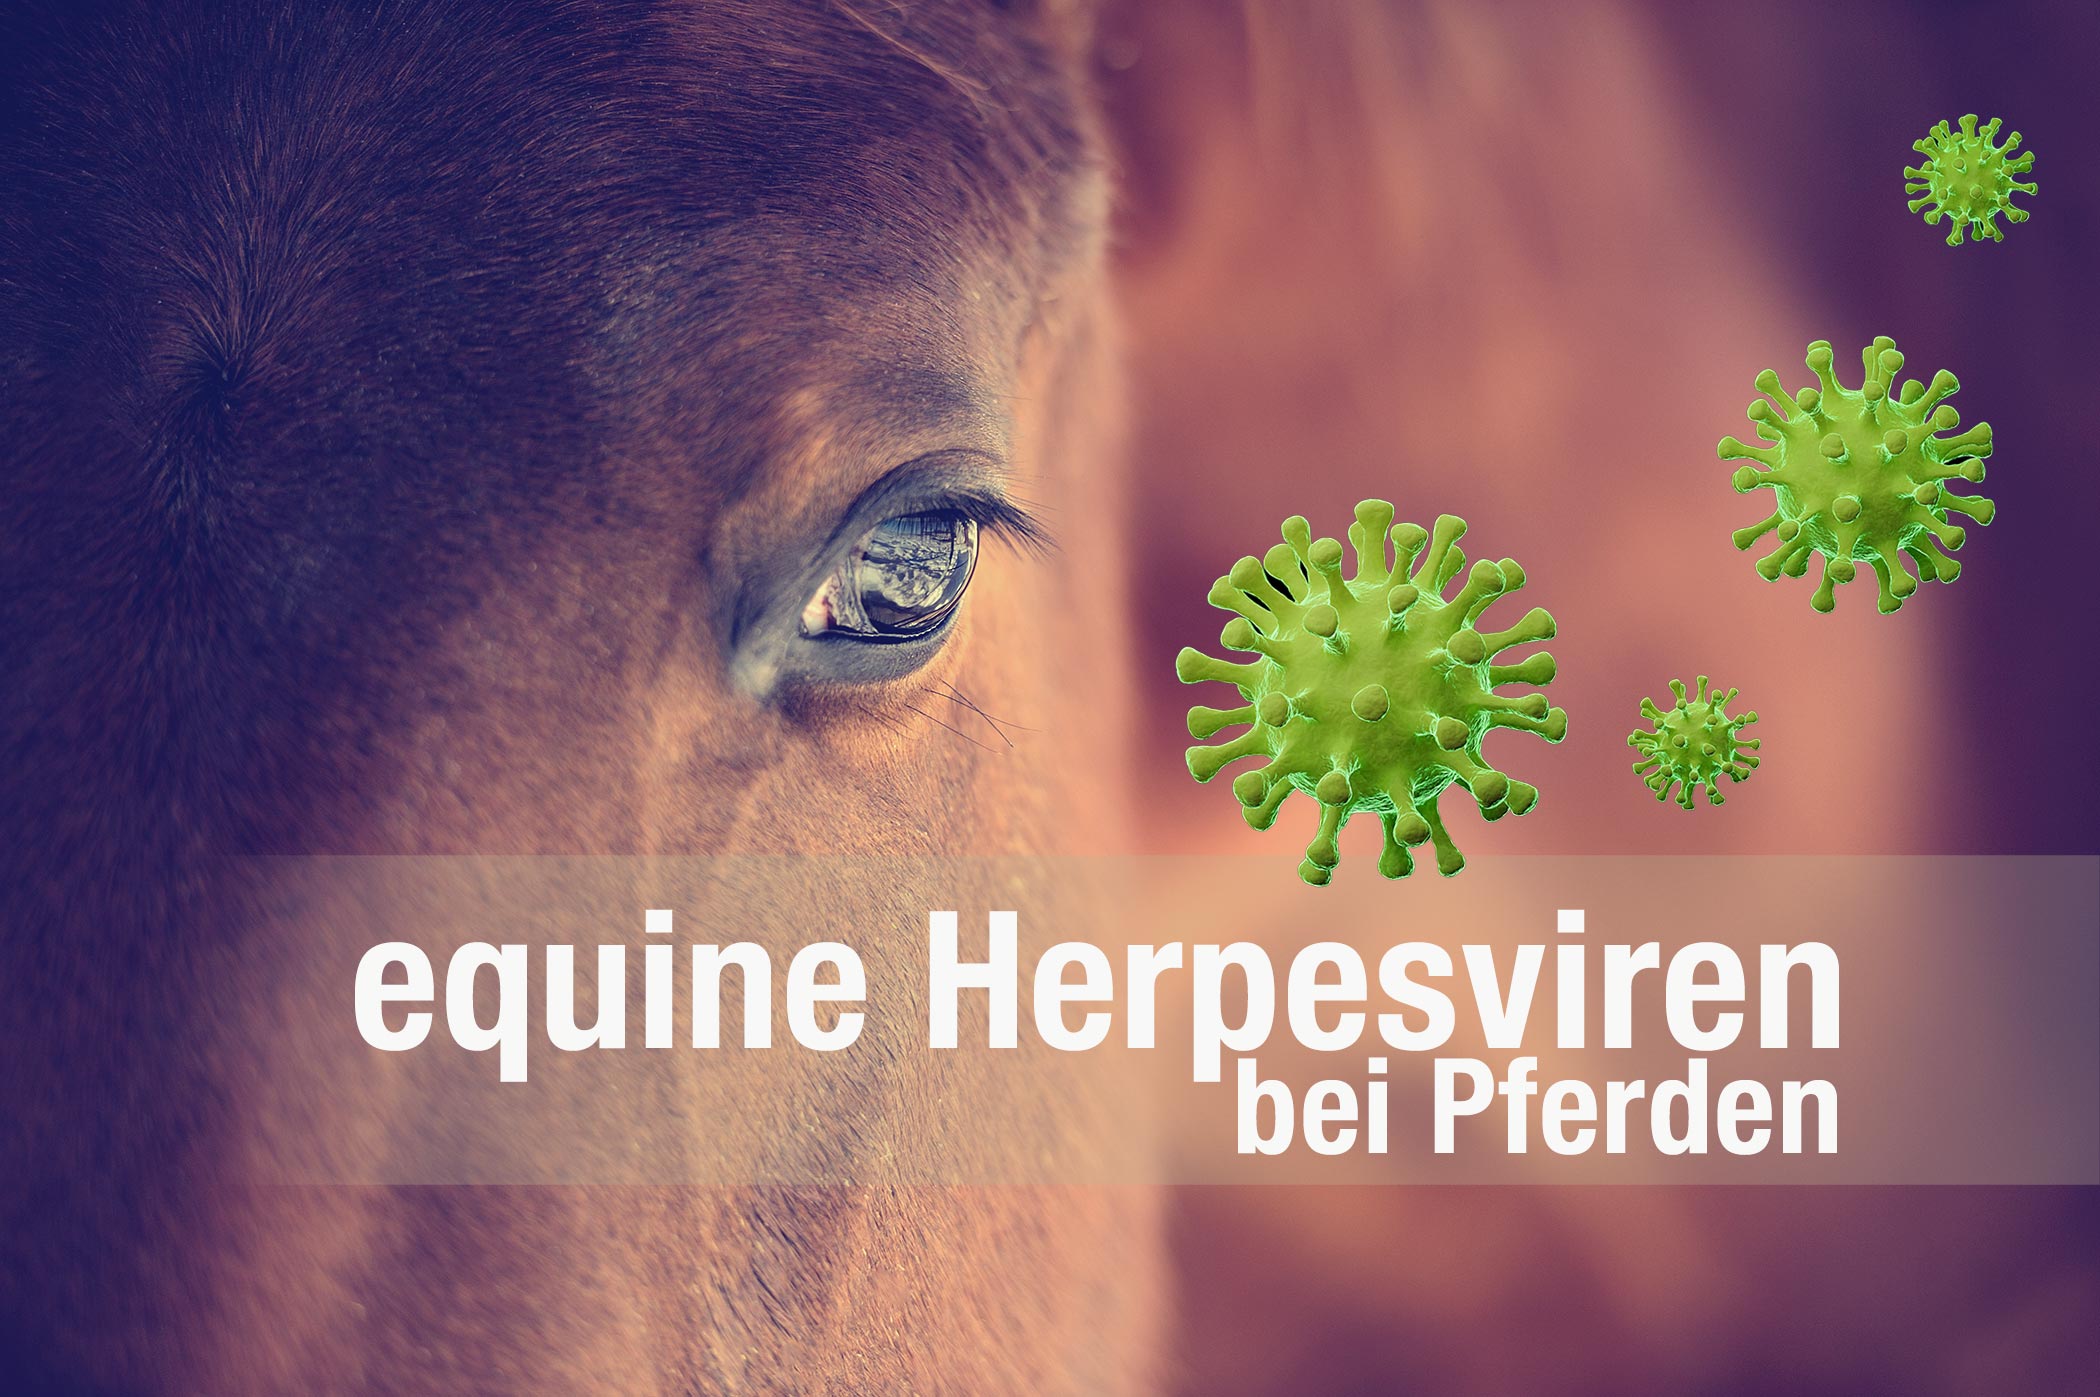 das equine Herpesvirus bei Pferden